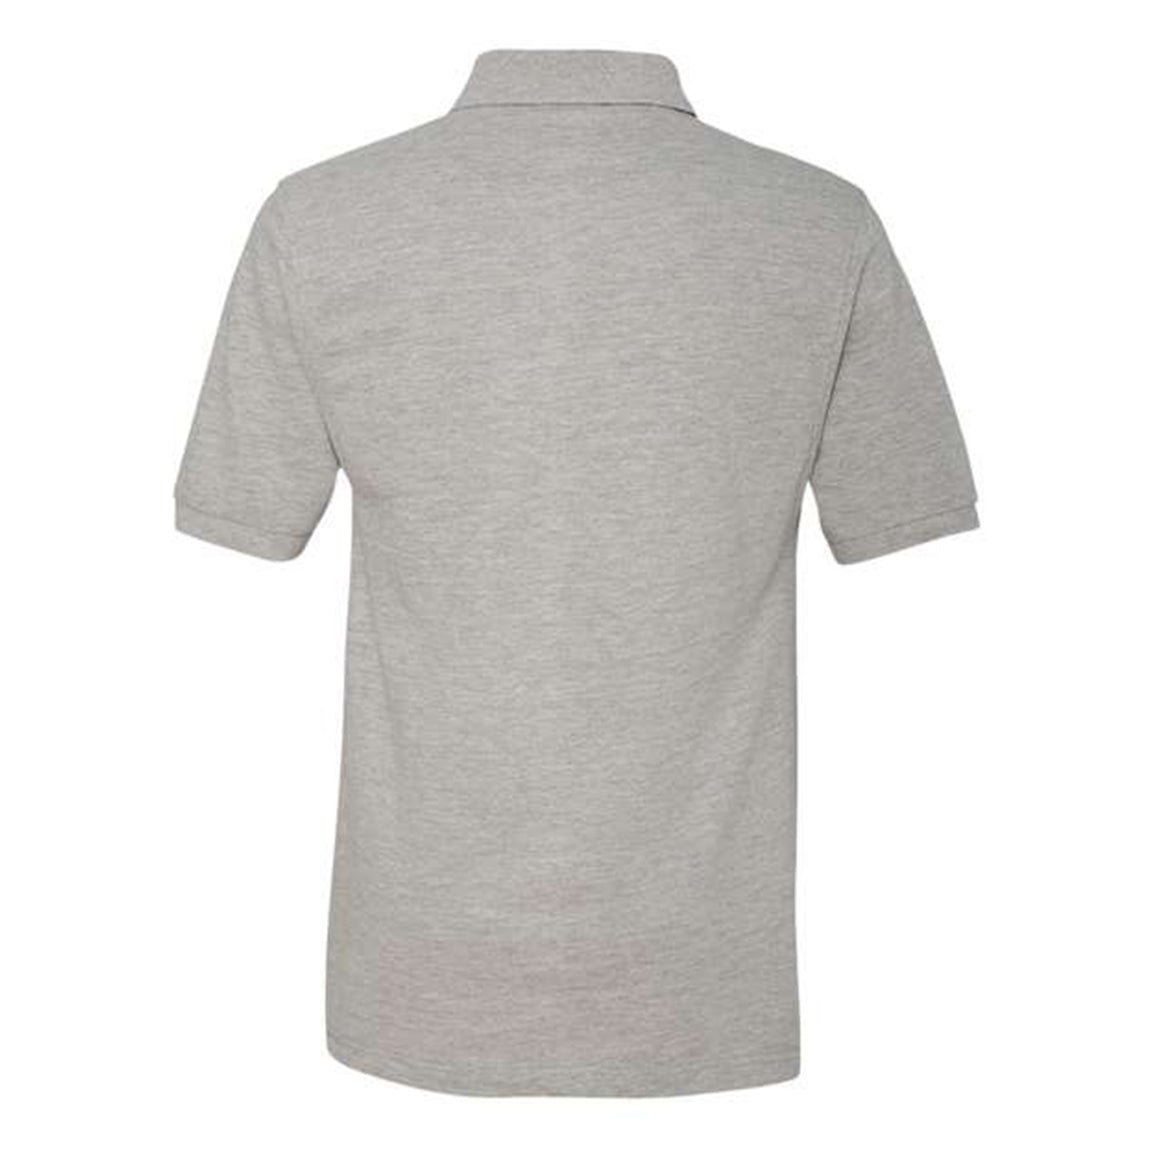 Cotton Piqué Sport Shirt